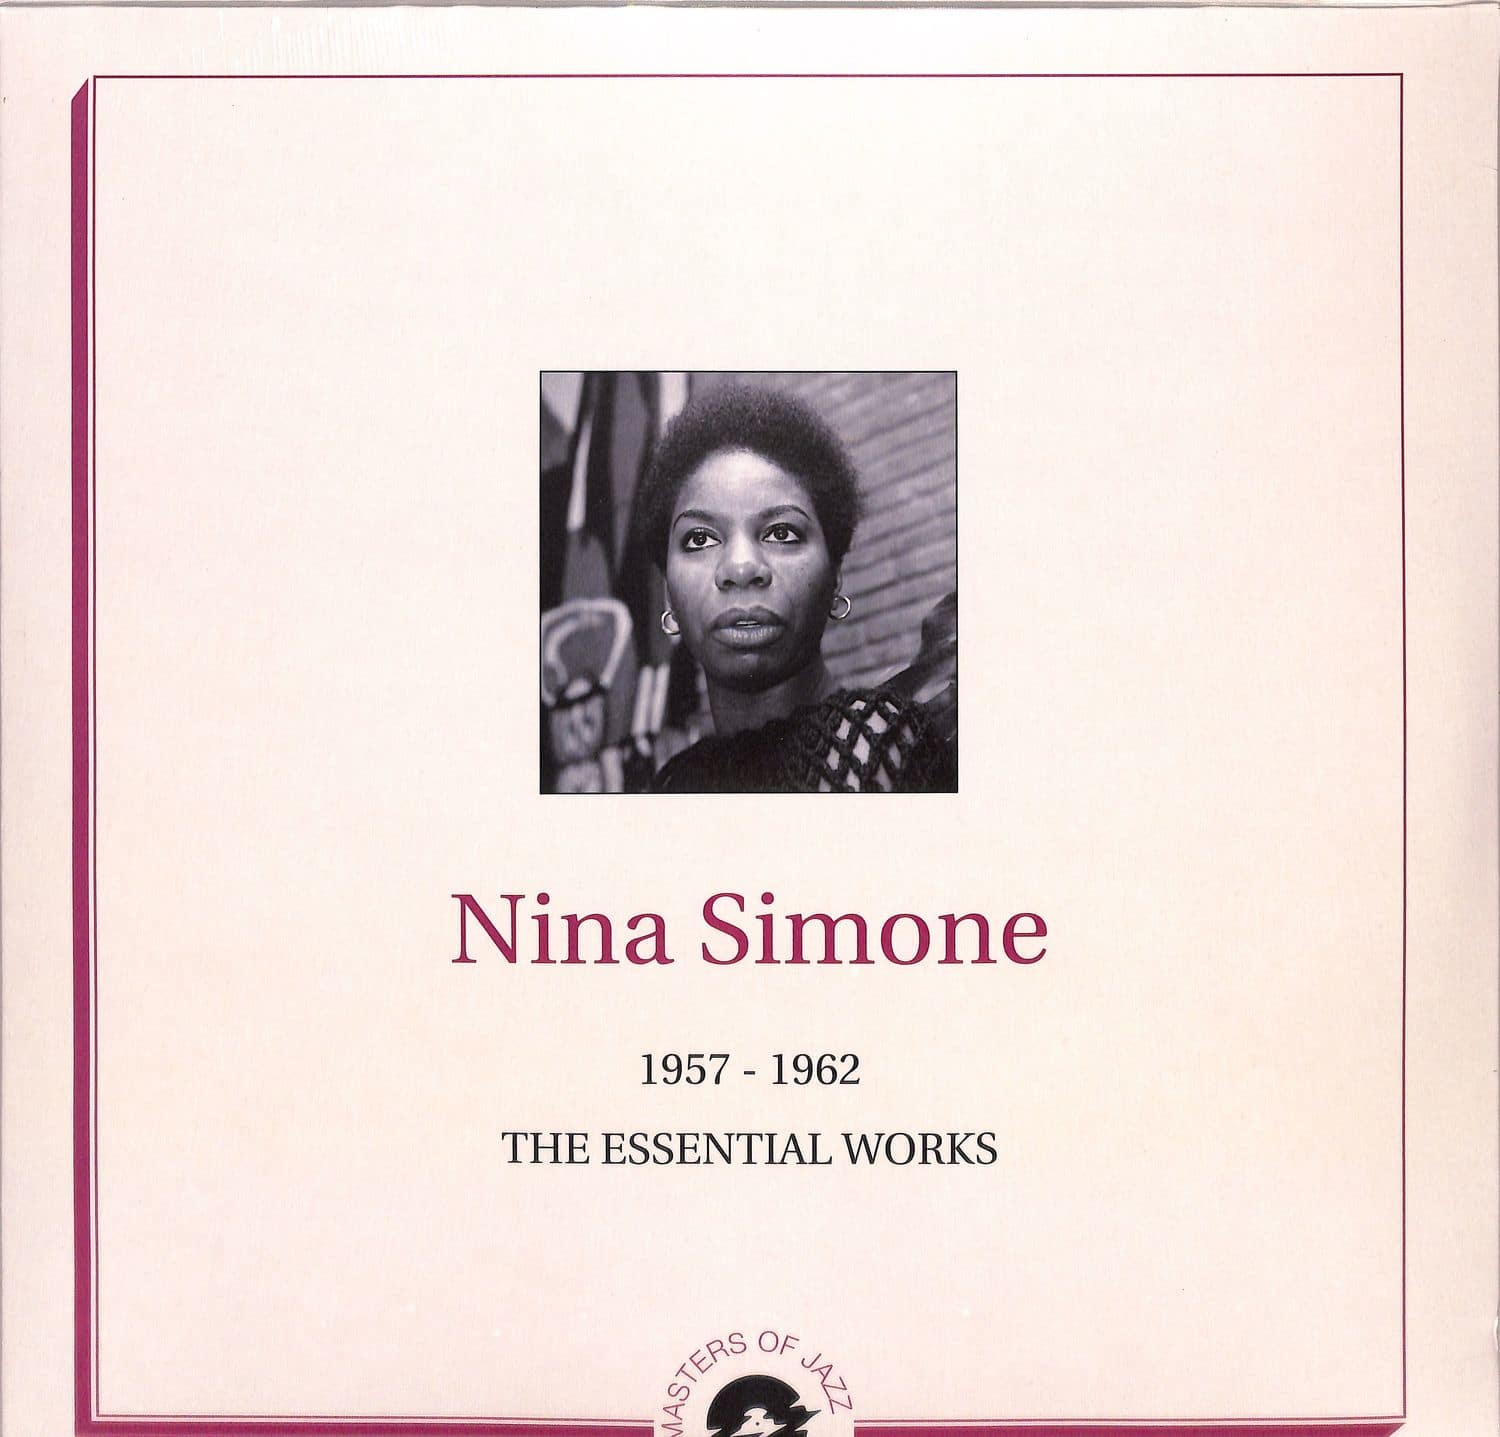 Nina Simone - THE ESSENTIAL WORKS 1957-1962 